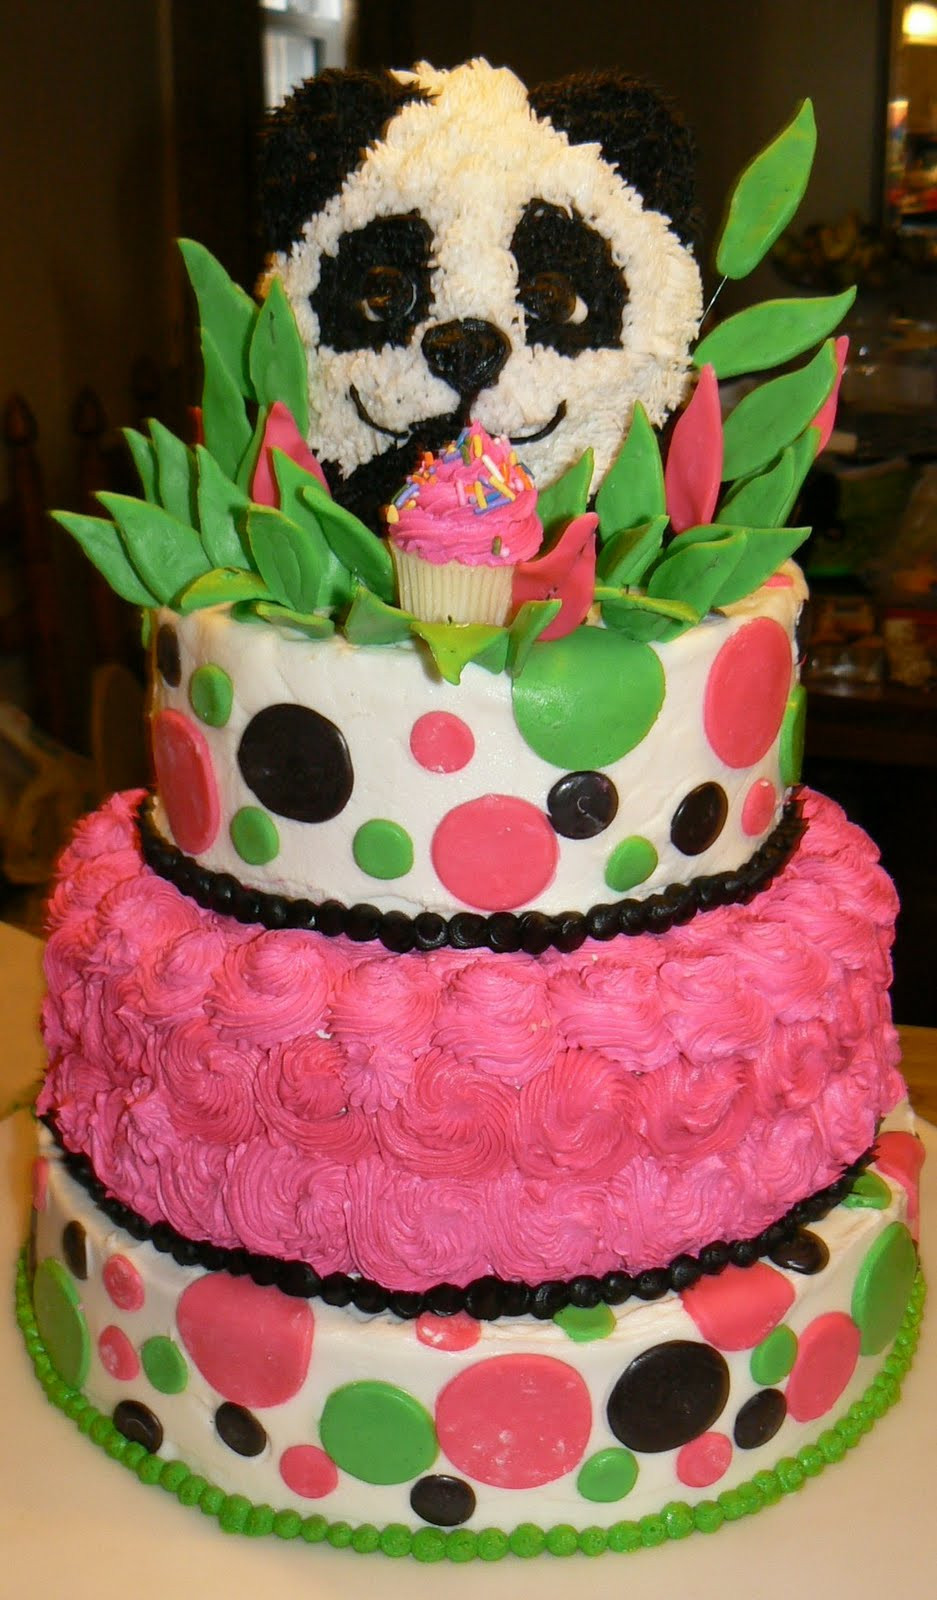 Best ideas about Panda Birthday Cake
. Save or Pin Kelly Roberts Designs Panda Birthday Cake Now.